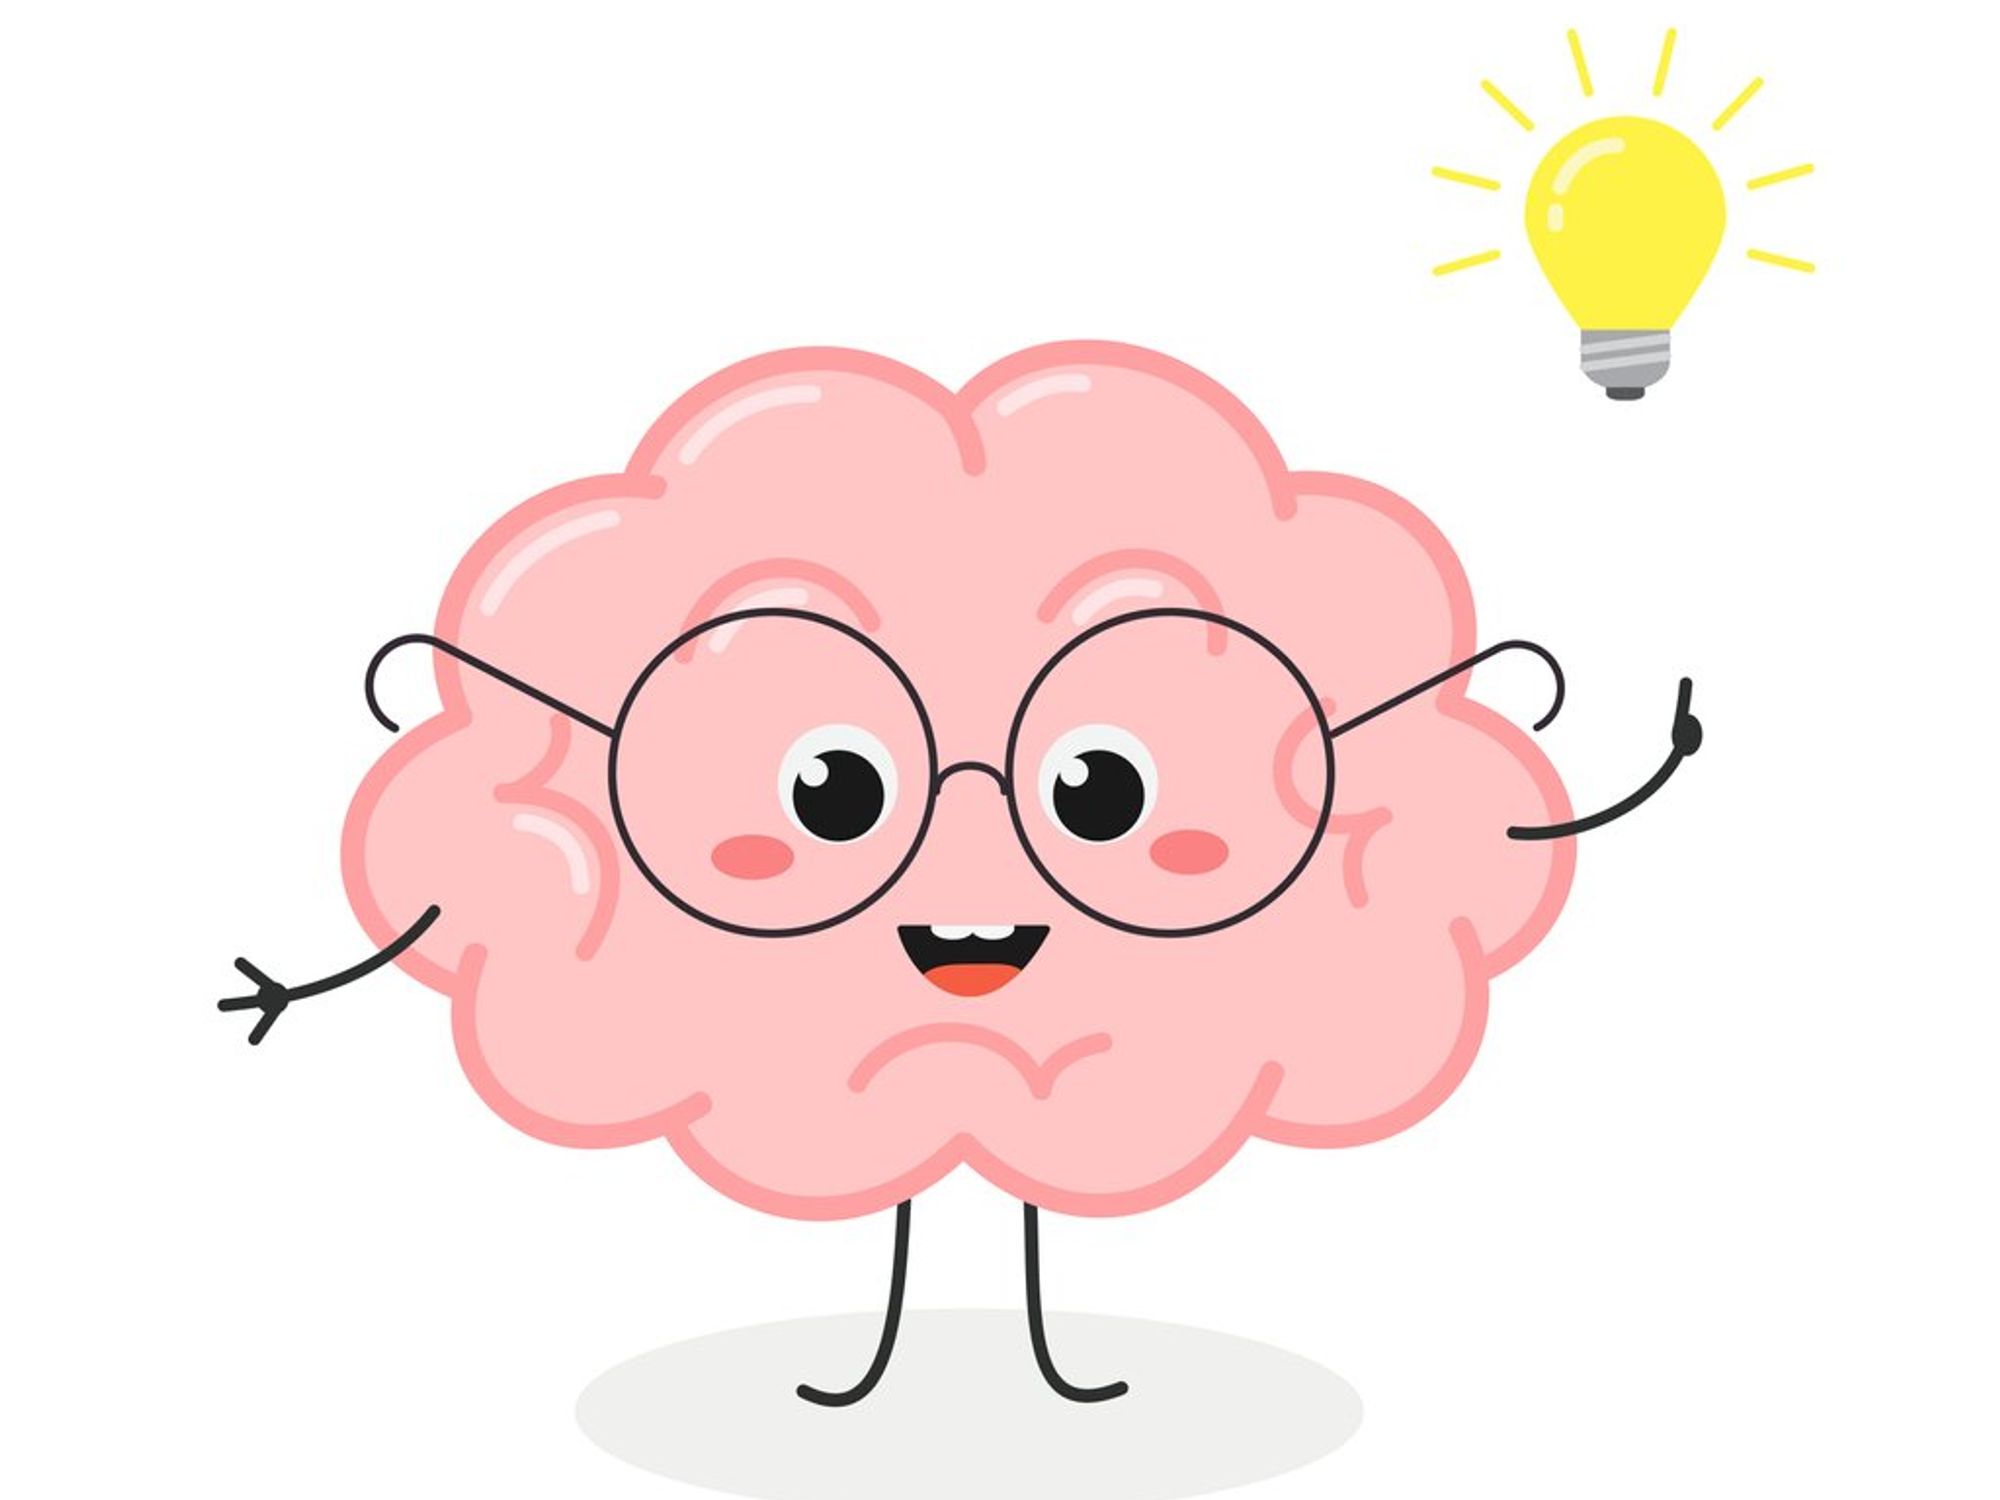 Cute cartoon brain come up with bright idea